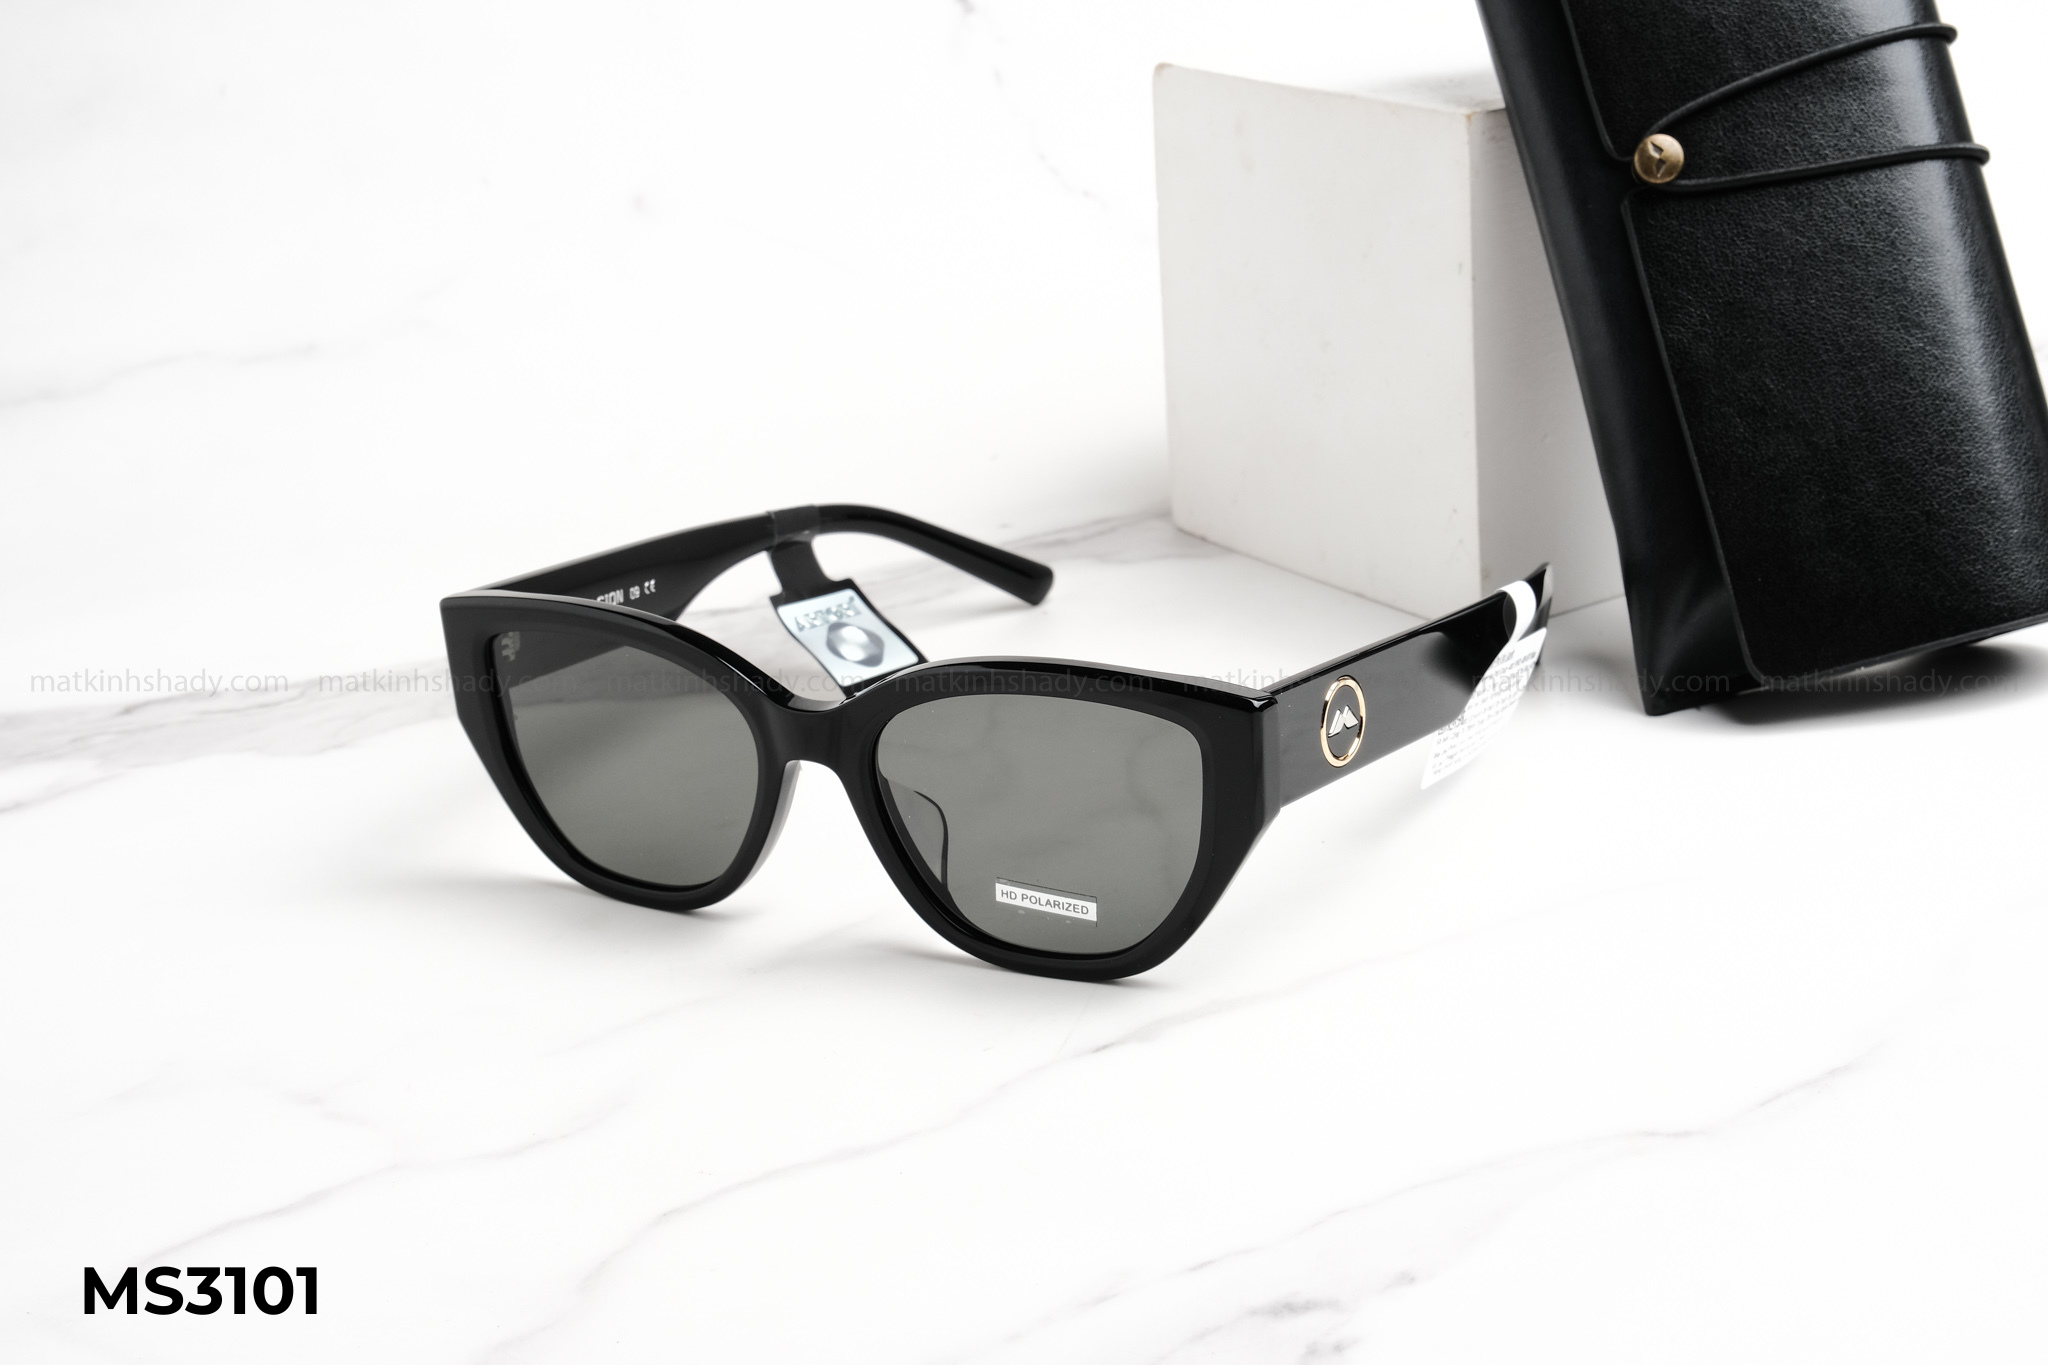  Molsion Eyewear - Glasses - MS3101 